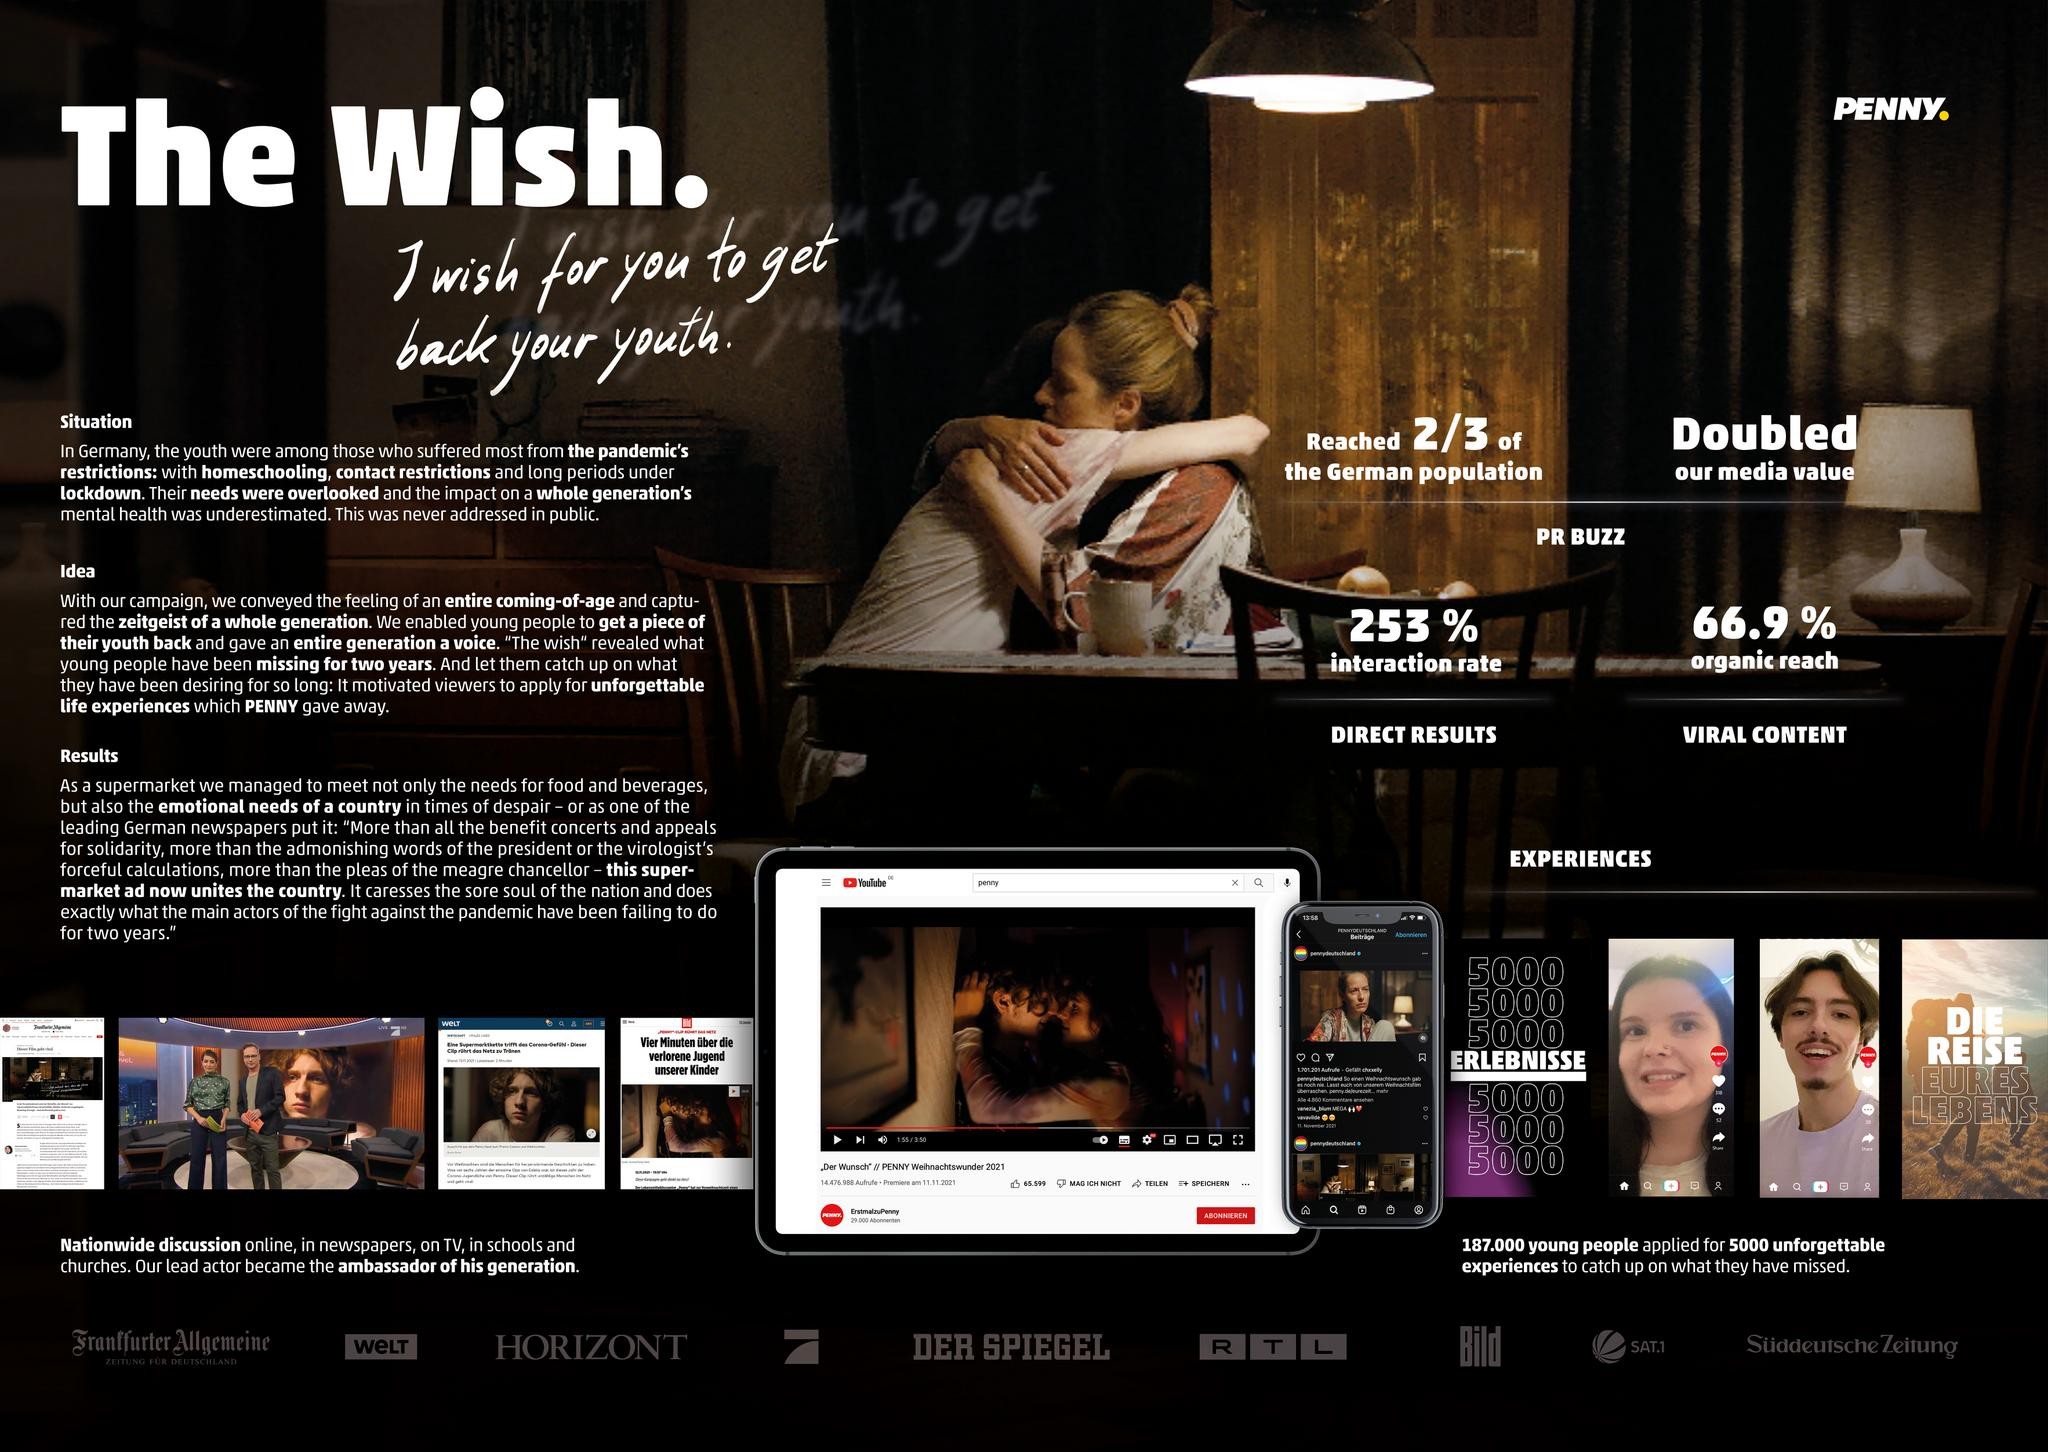 The Wish Campaign